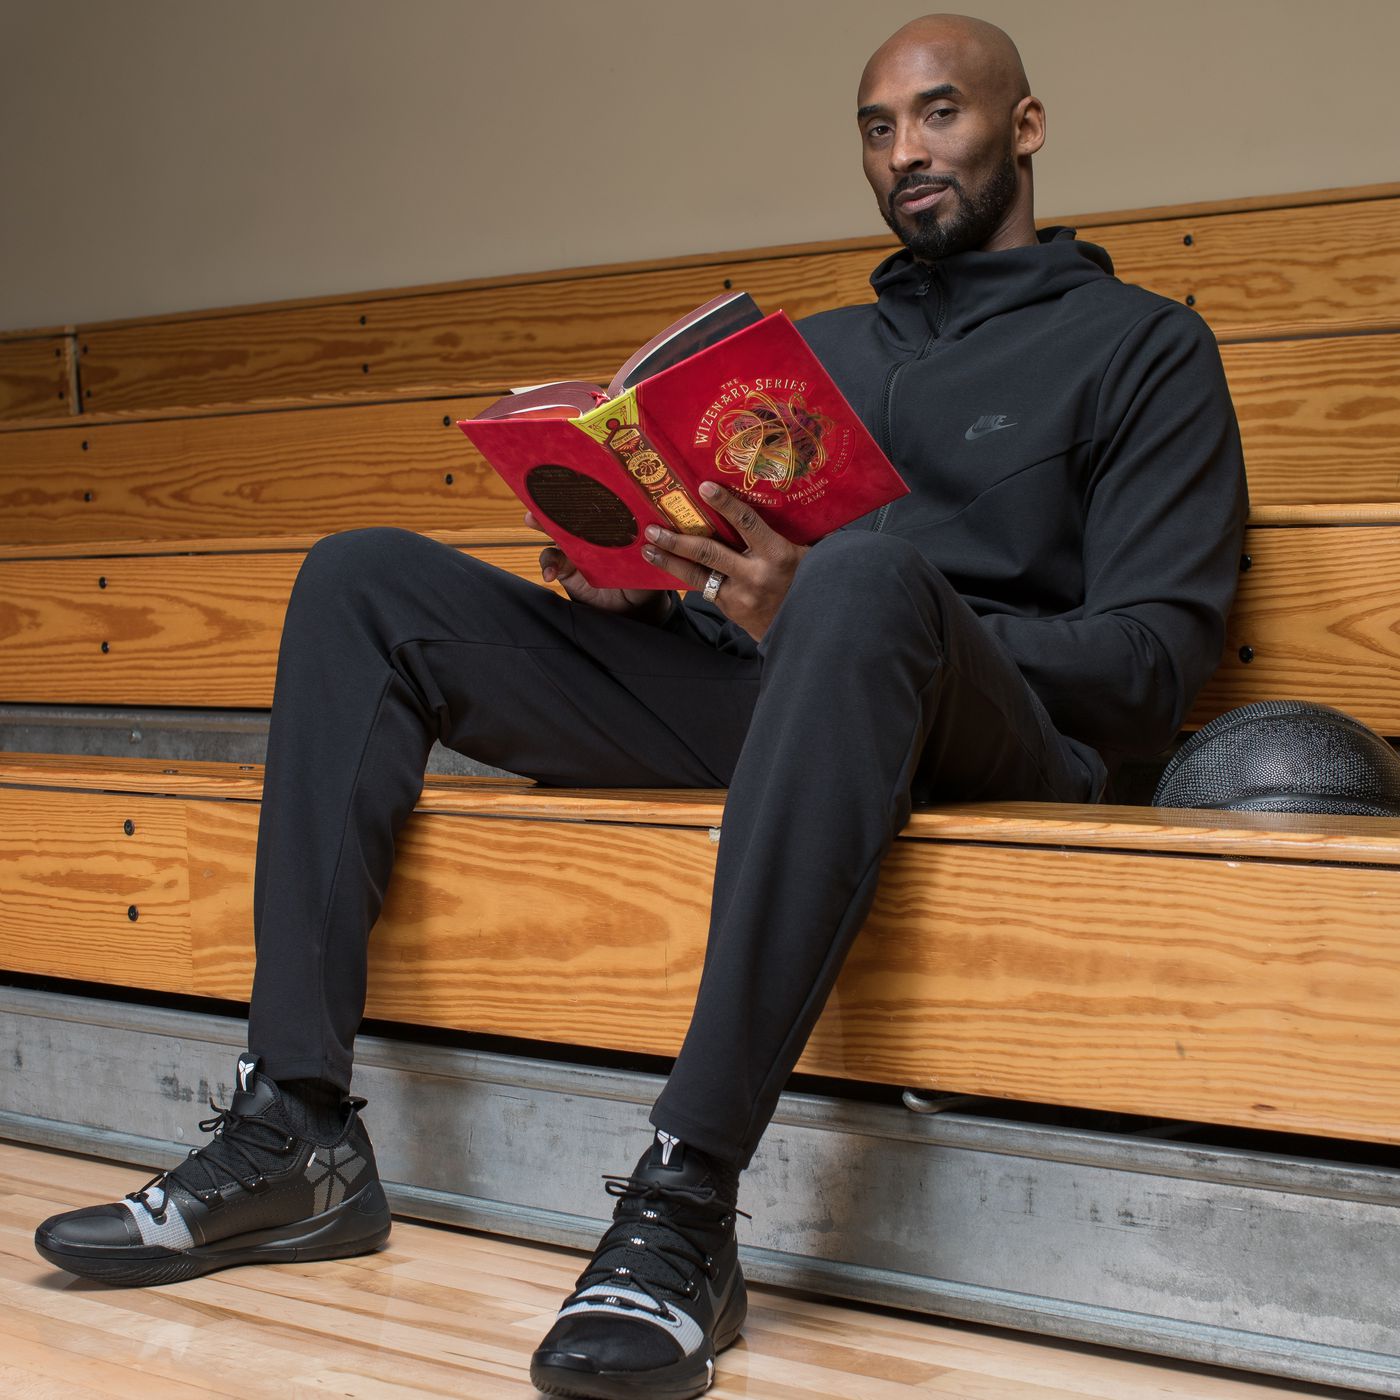 Waterloo Public Library on X: Kobe Bryant. Athlete. Basketball